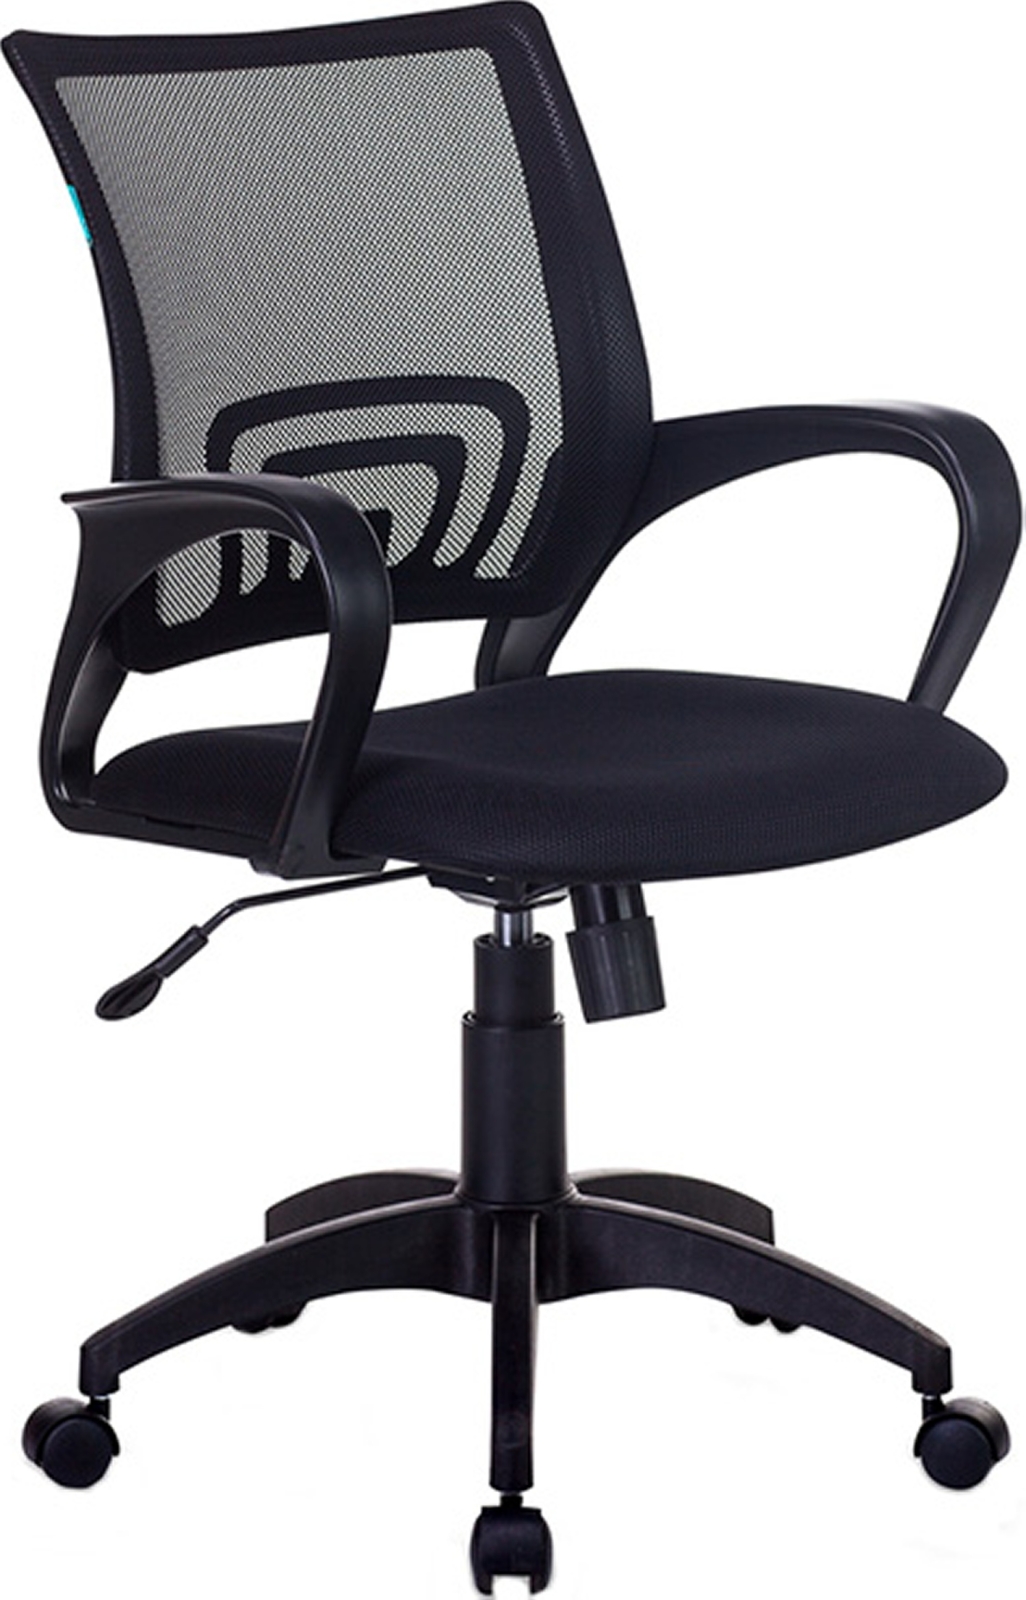 Кресло компьютерное KING STYLE KE-695N/BLACK черный TW-01 TW-11 сетка/ткань